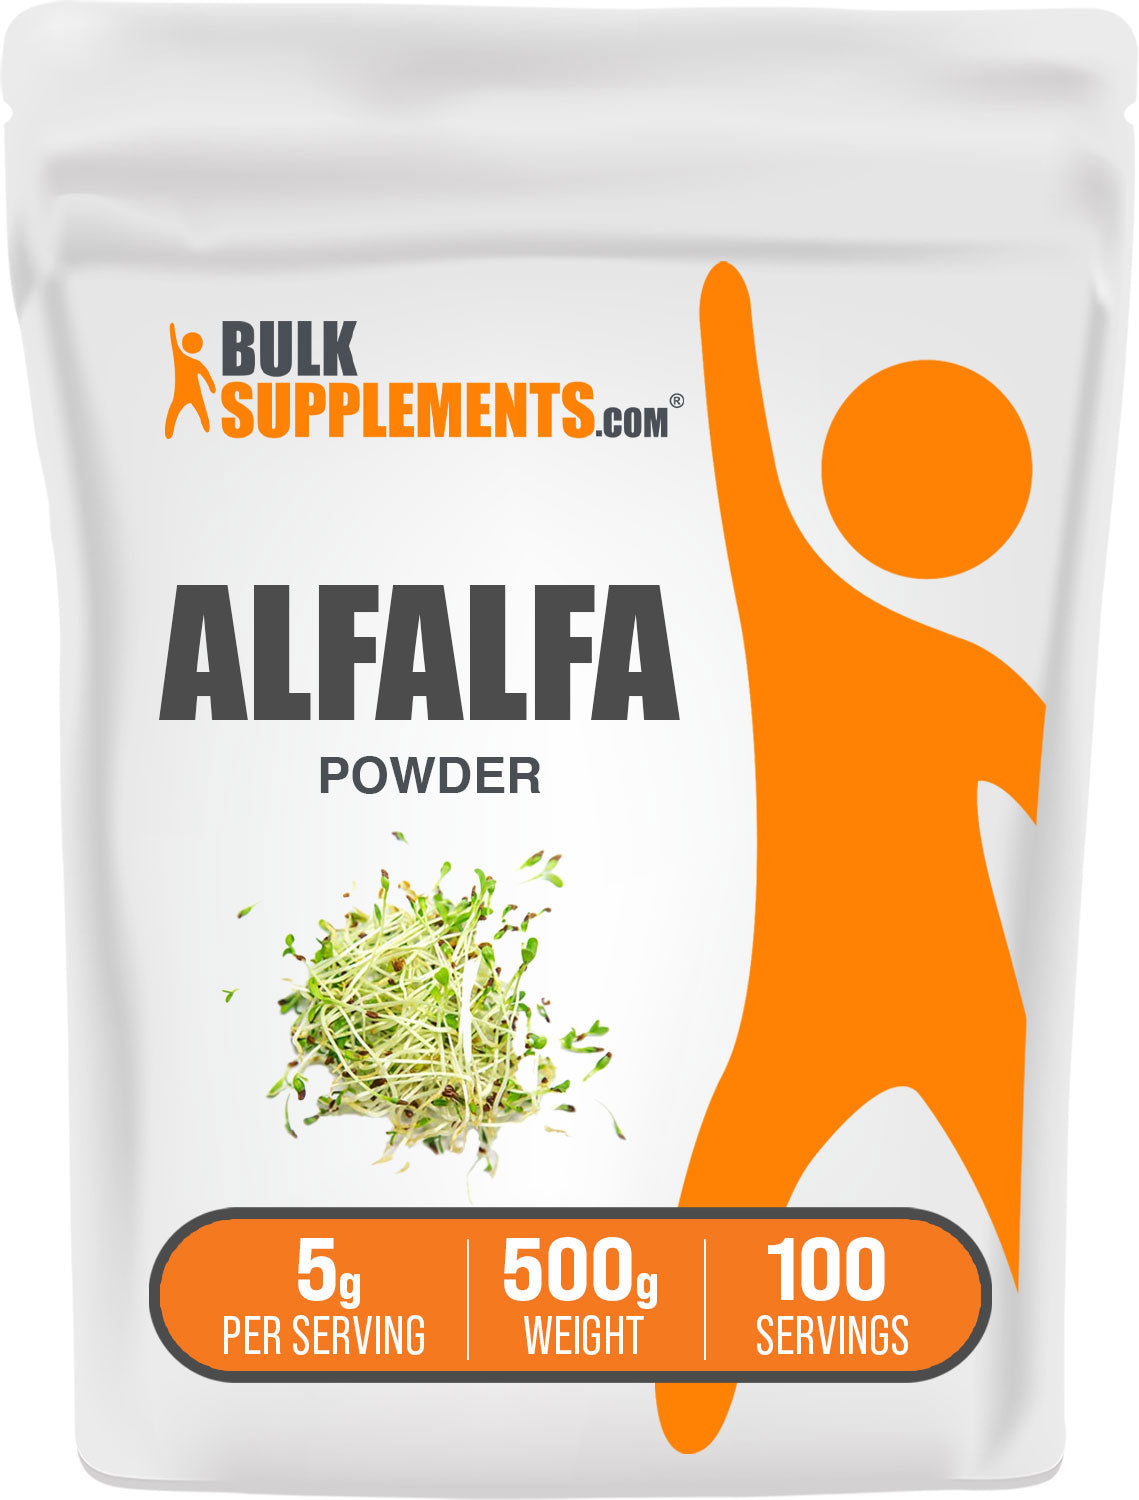 Alfalfa Powder 500g bag